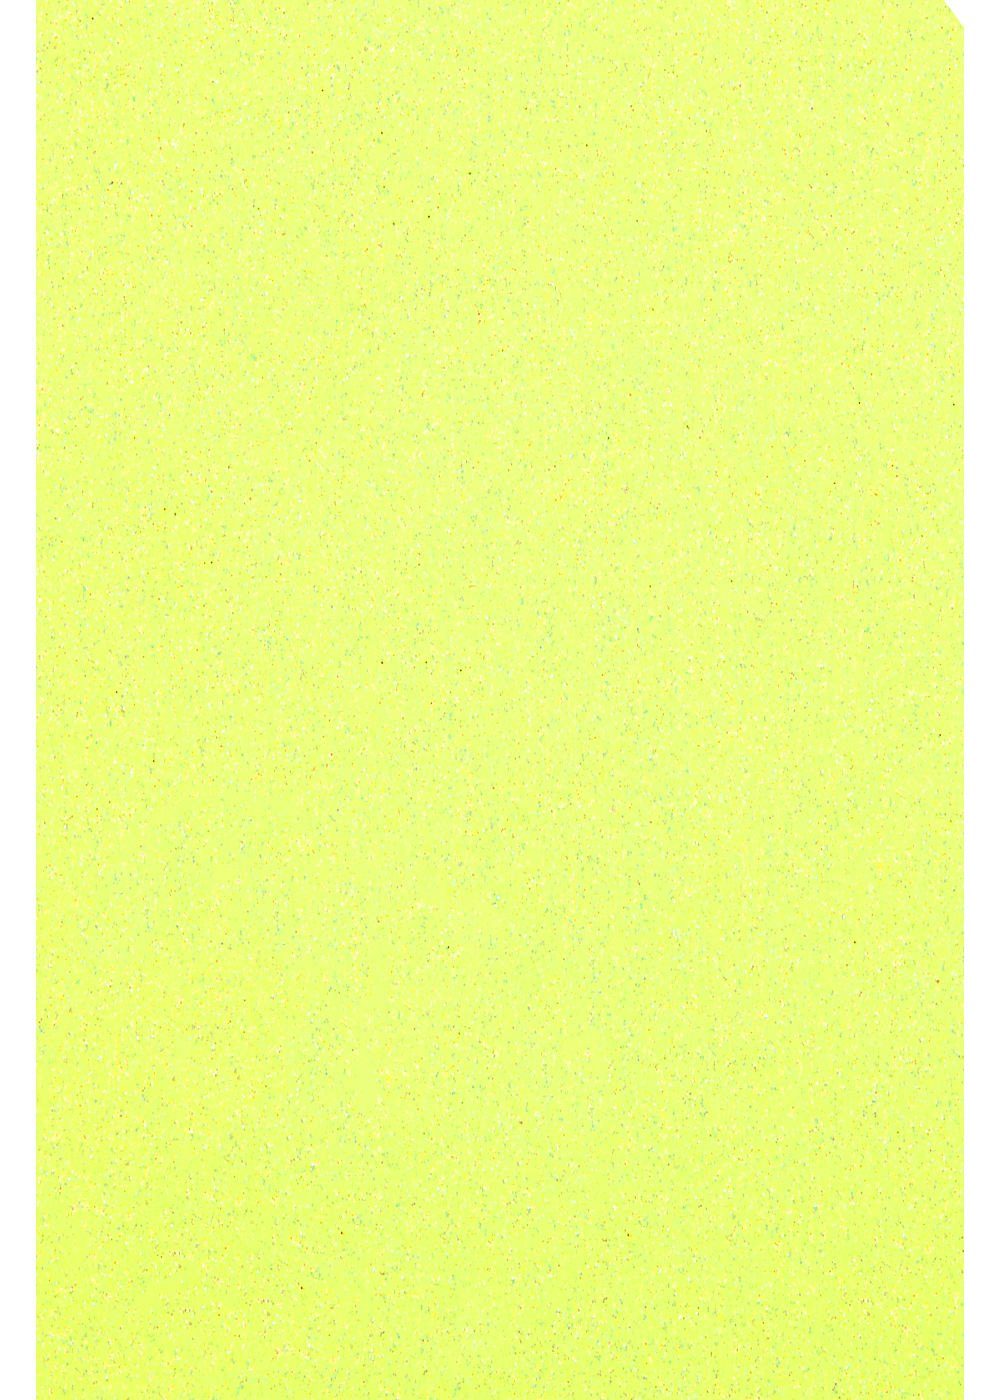 Transferfolie/Textilfolie Glitzer Transparentpapier Aufbügeln, Yellow Hilltop perfekt zum Plottern zum Neon